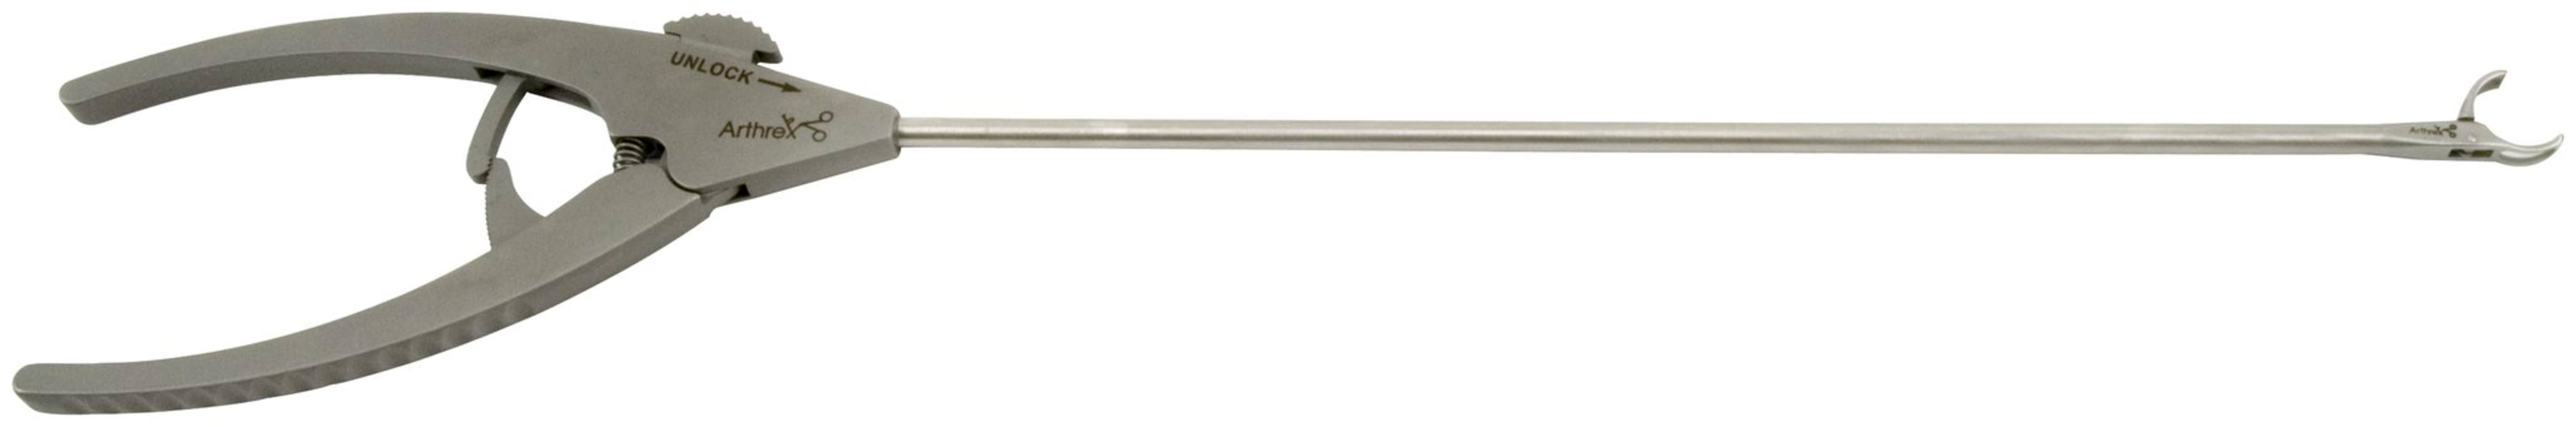 Grasper, Straight Loose Body Tip, ø4.2 mm, 220 mm Straight Shaft w/WishBone Handle